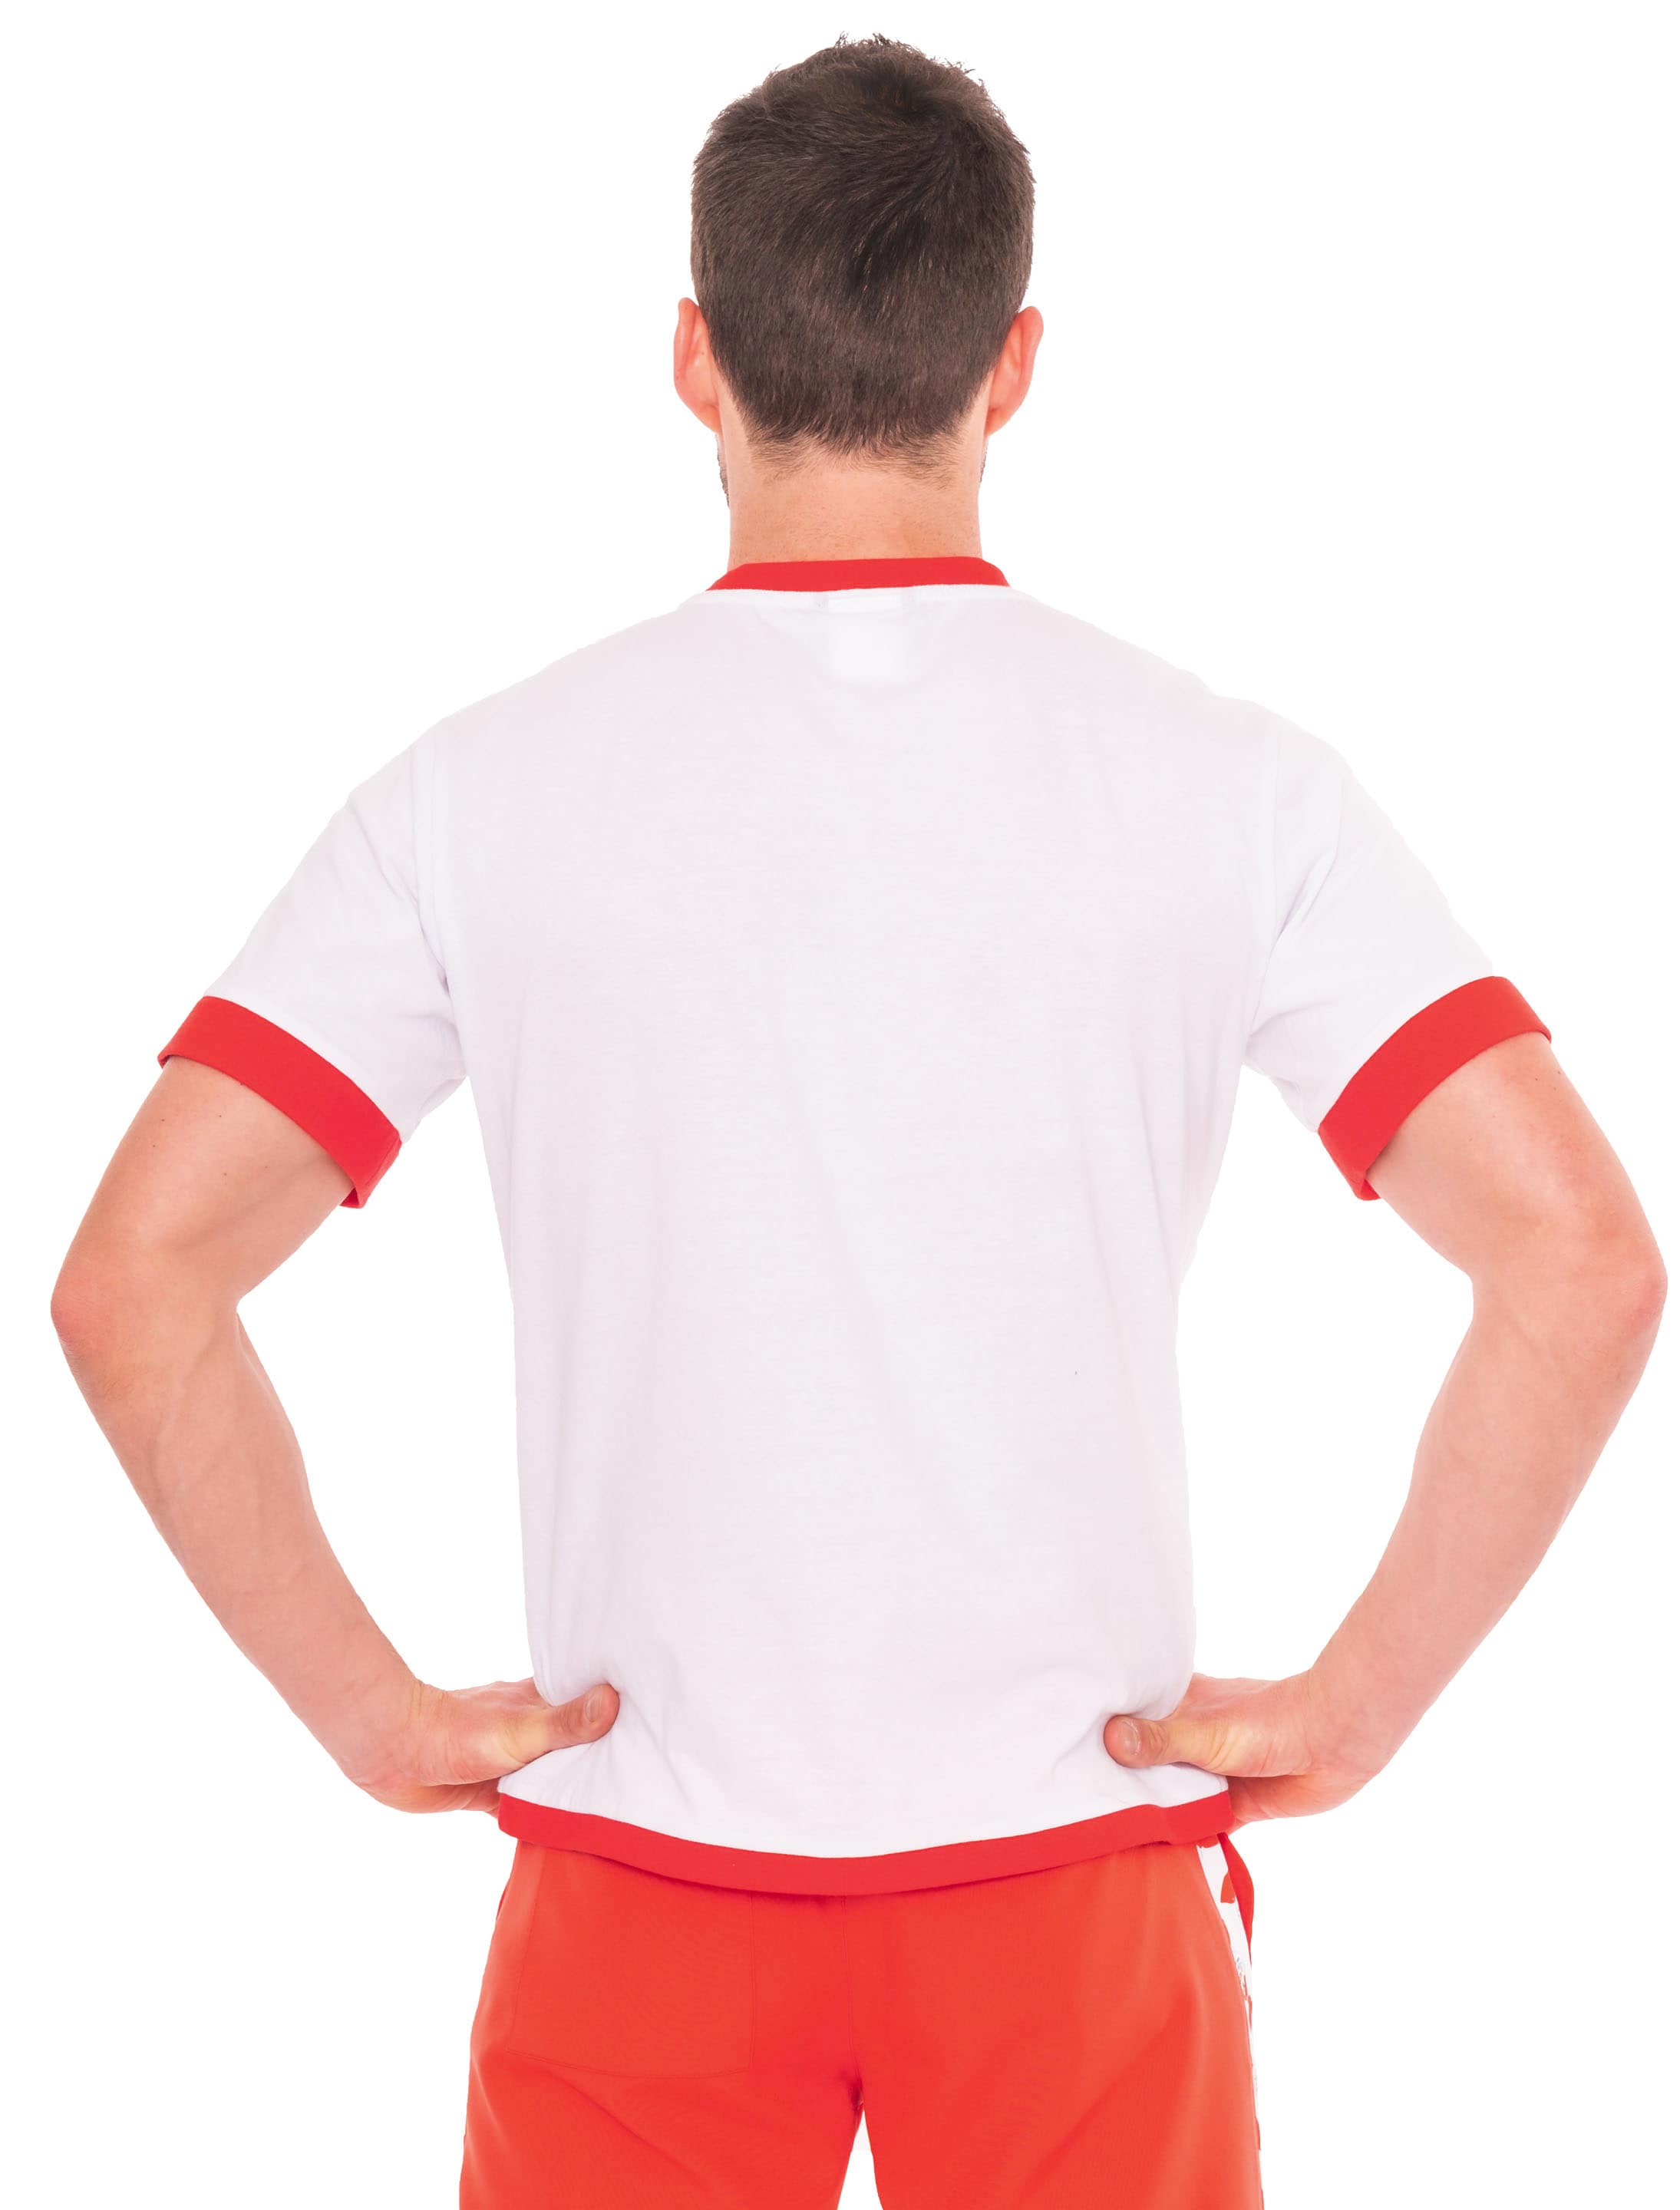 T-Shirt kinder Schoko-Bons Herren rot/weiß S